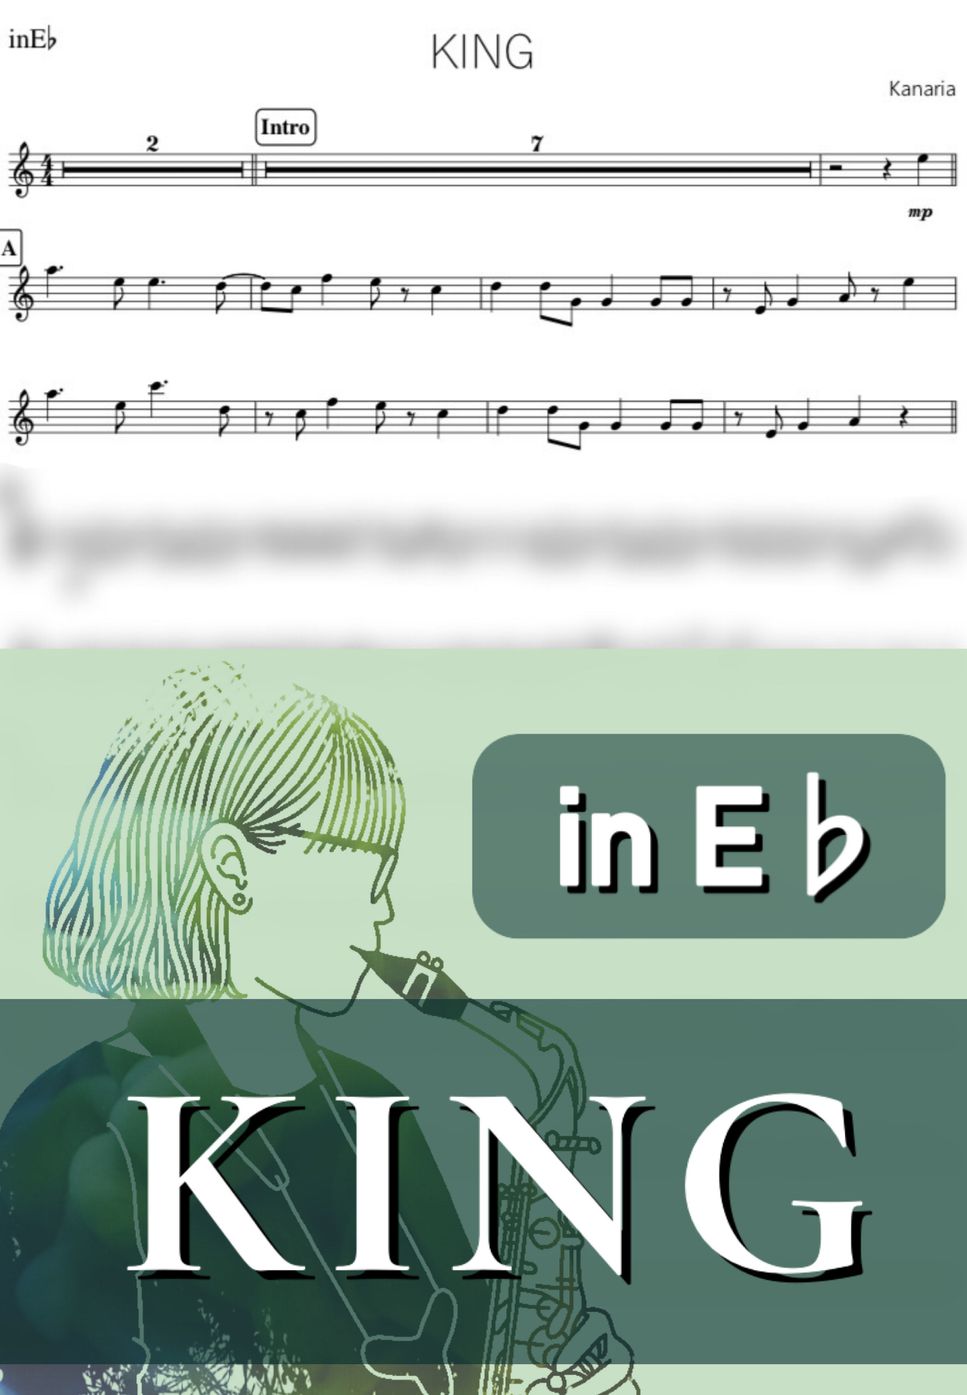 Kanaria - KING (E♭) by kanamusic